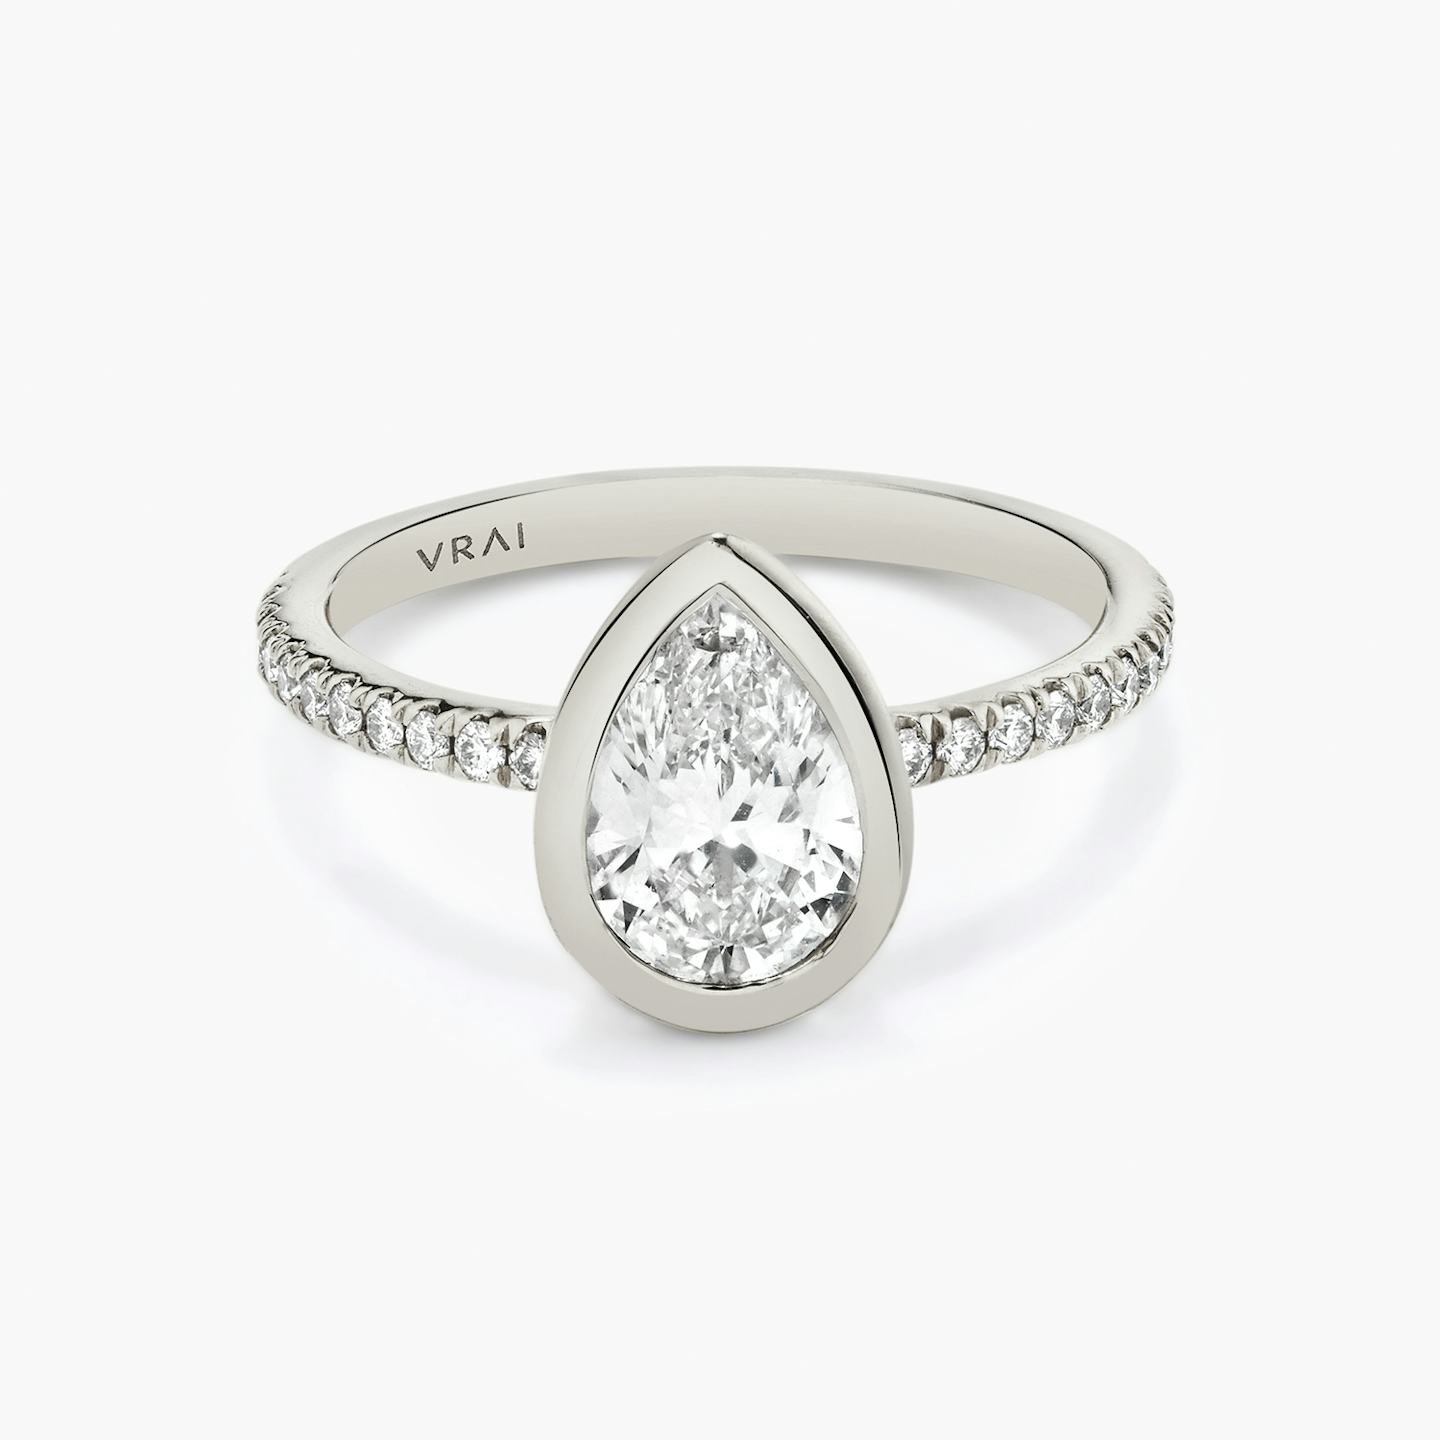 Platinum Signature Bezel engagement ring with Pear cut diamond